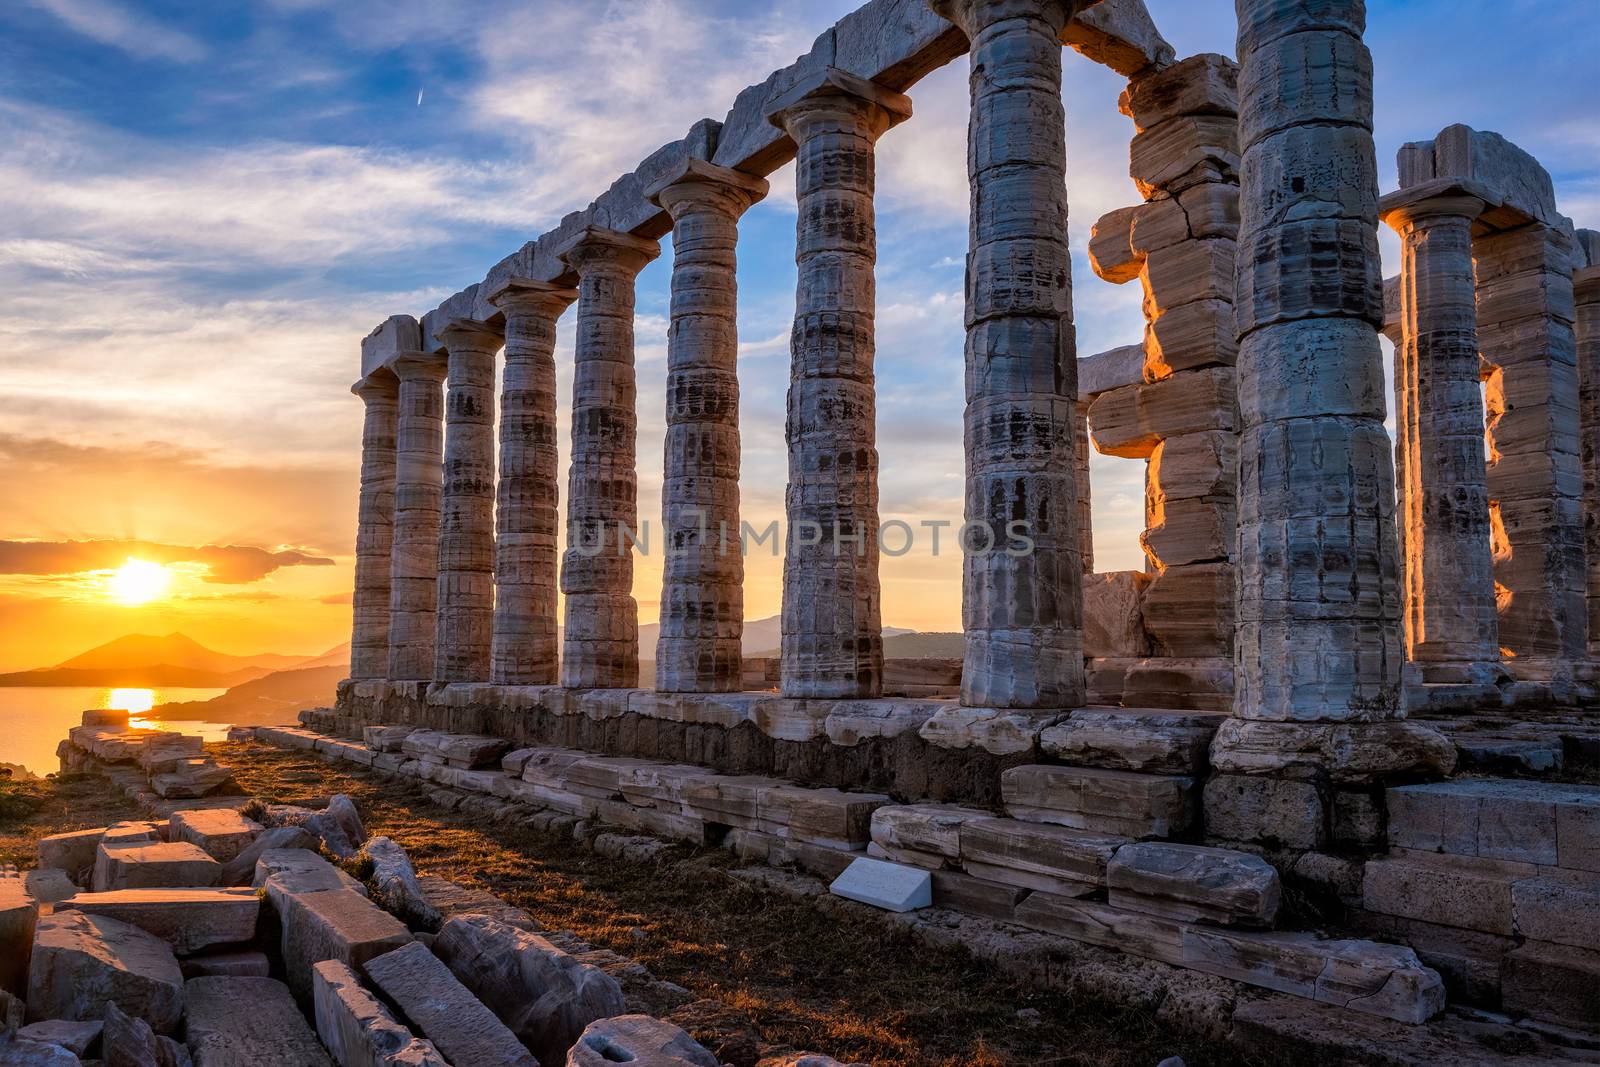 Poseidon temple ruins on Cape Sounio on sunset, Greece by dimol